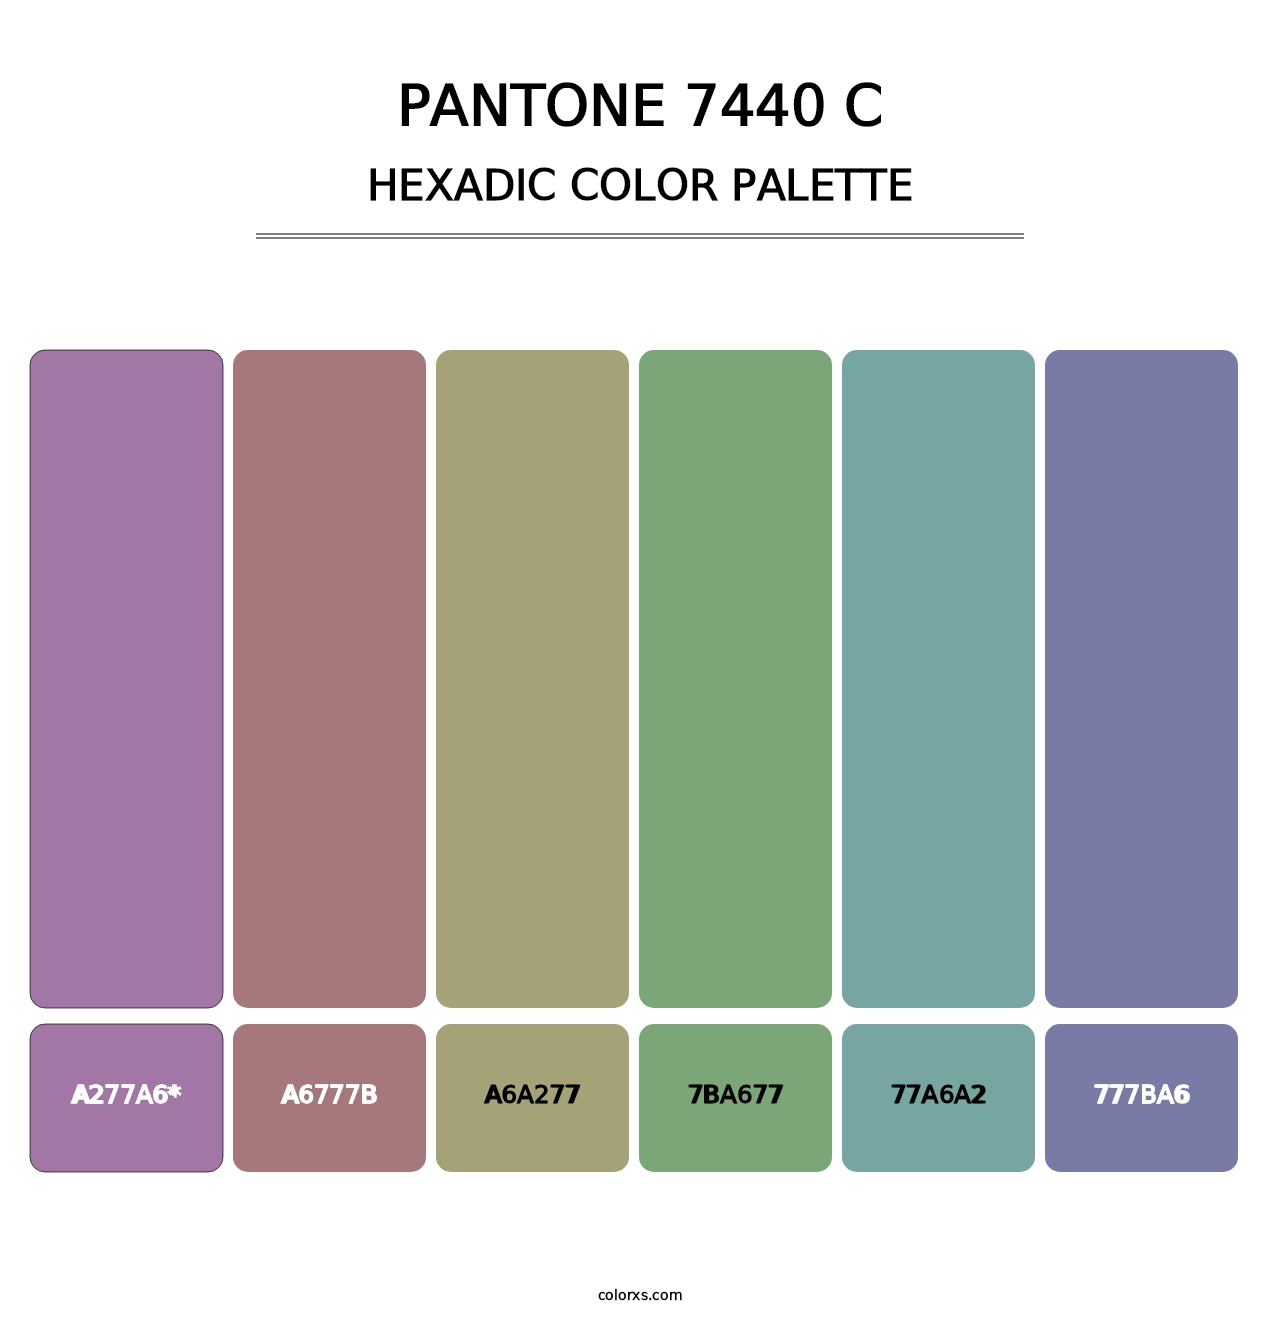 PANTONE 7440 C - Hexadic Color Palette